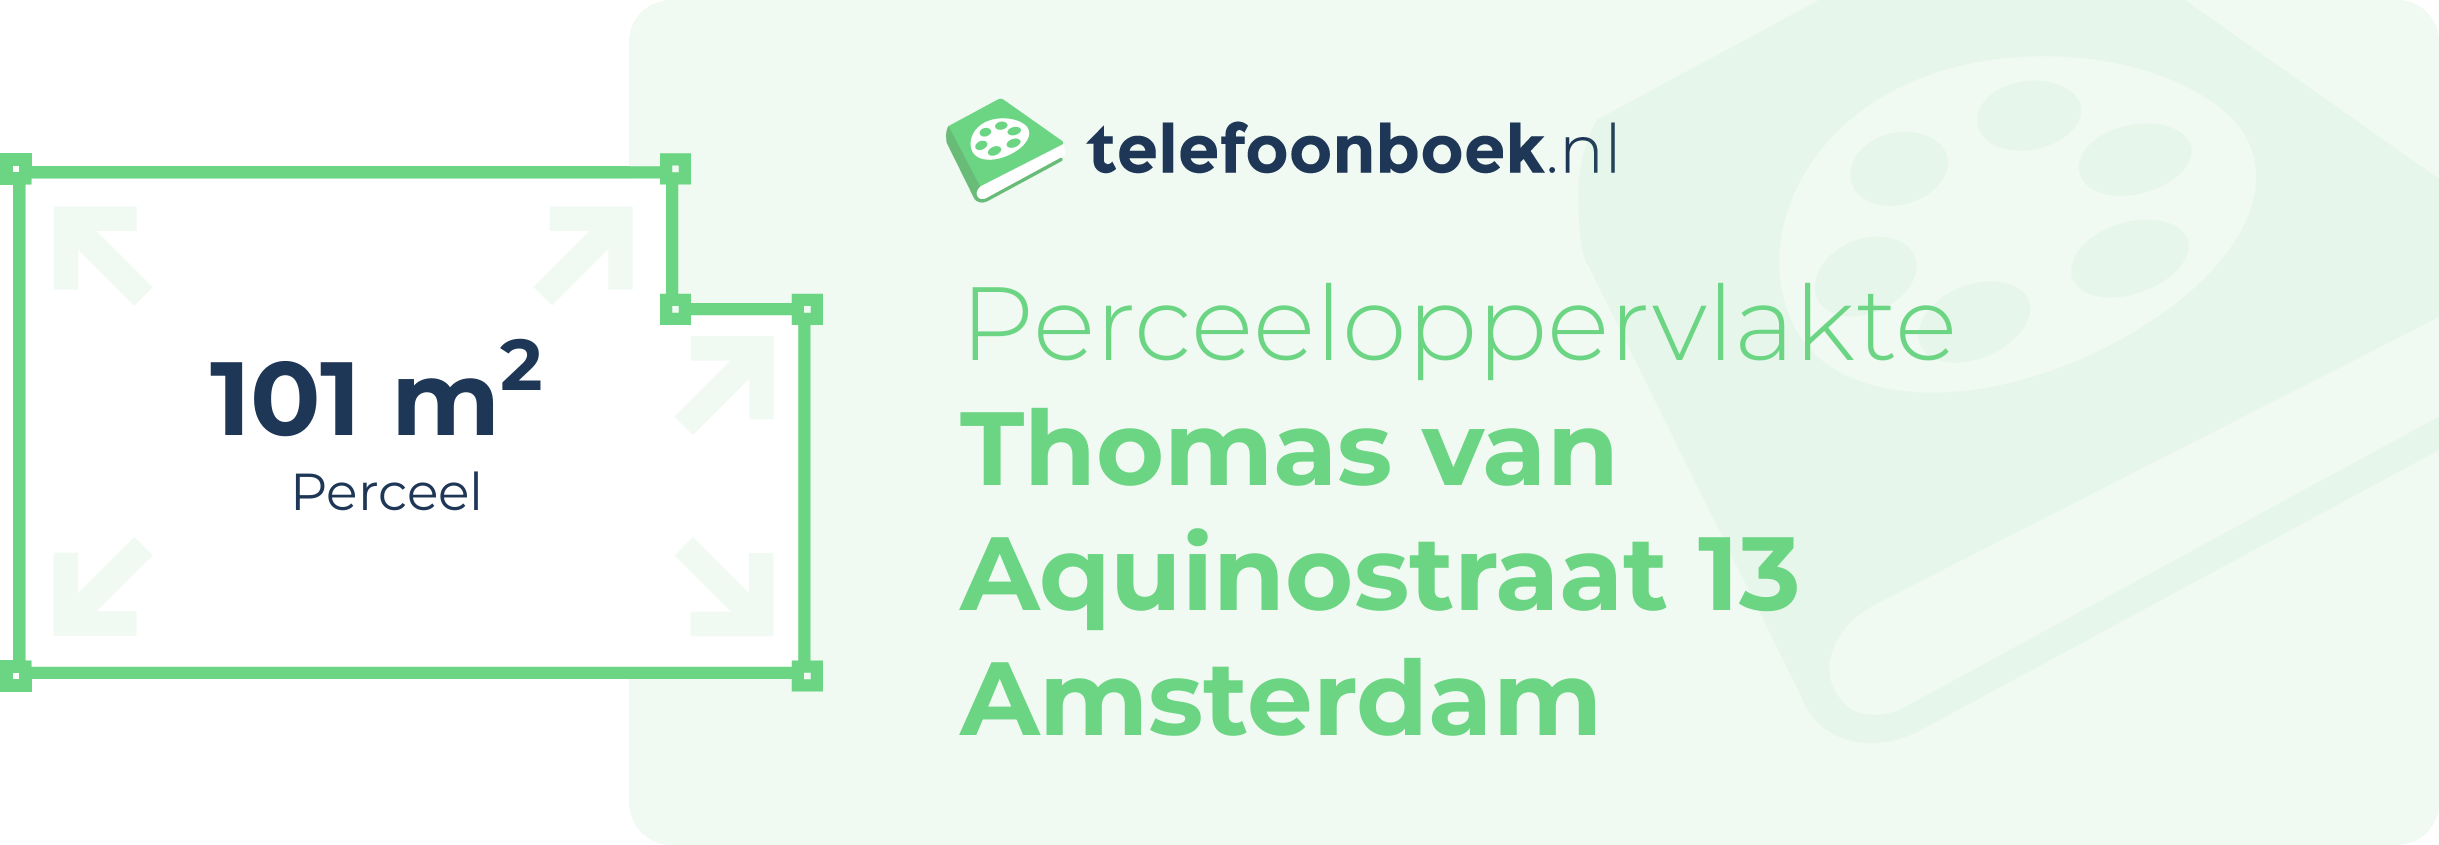 Perceeloppervlakte Thomas Van Aquinostraat 13 Amsterdam